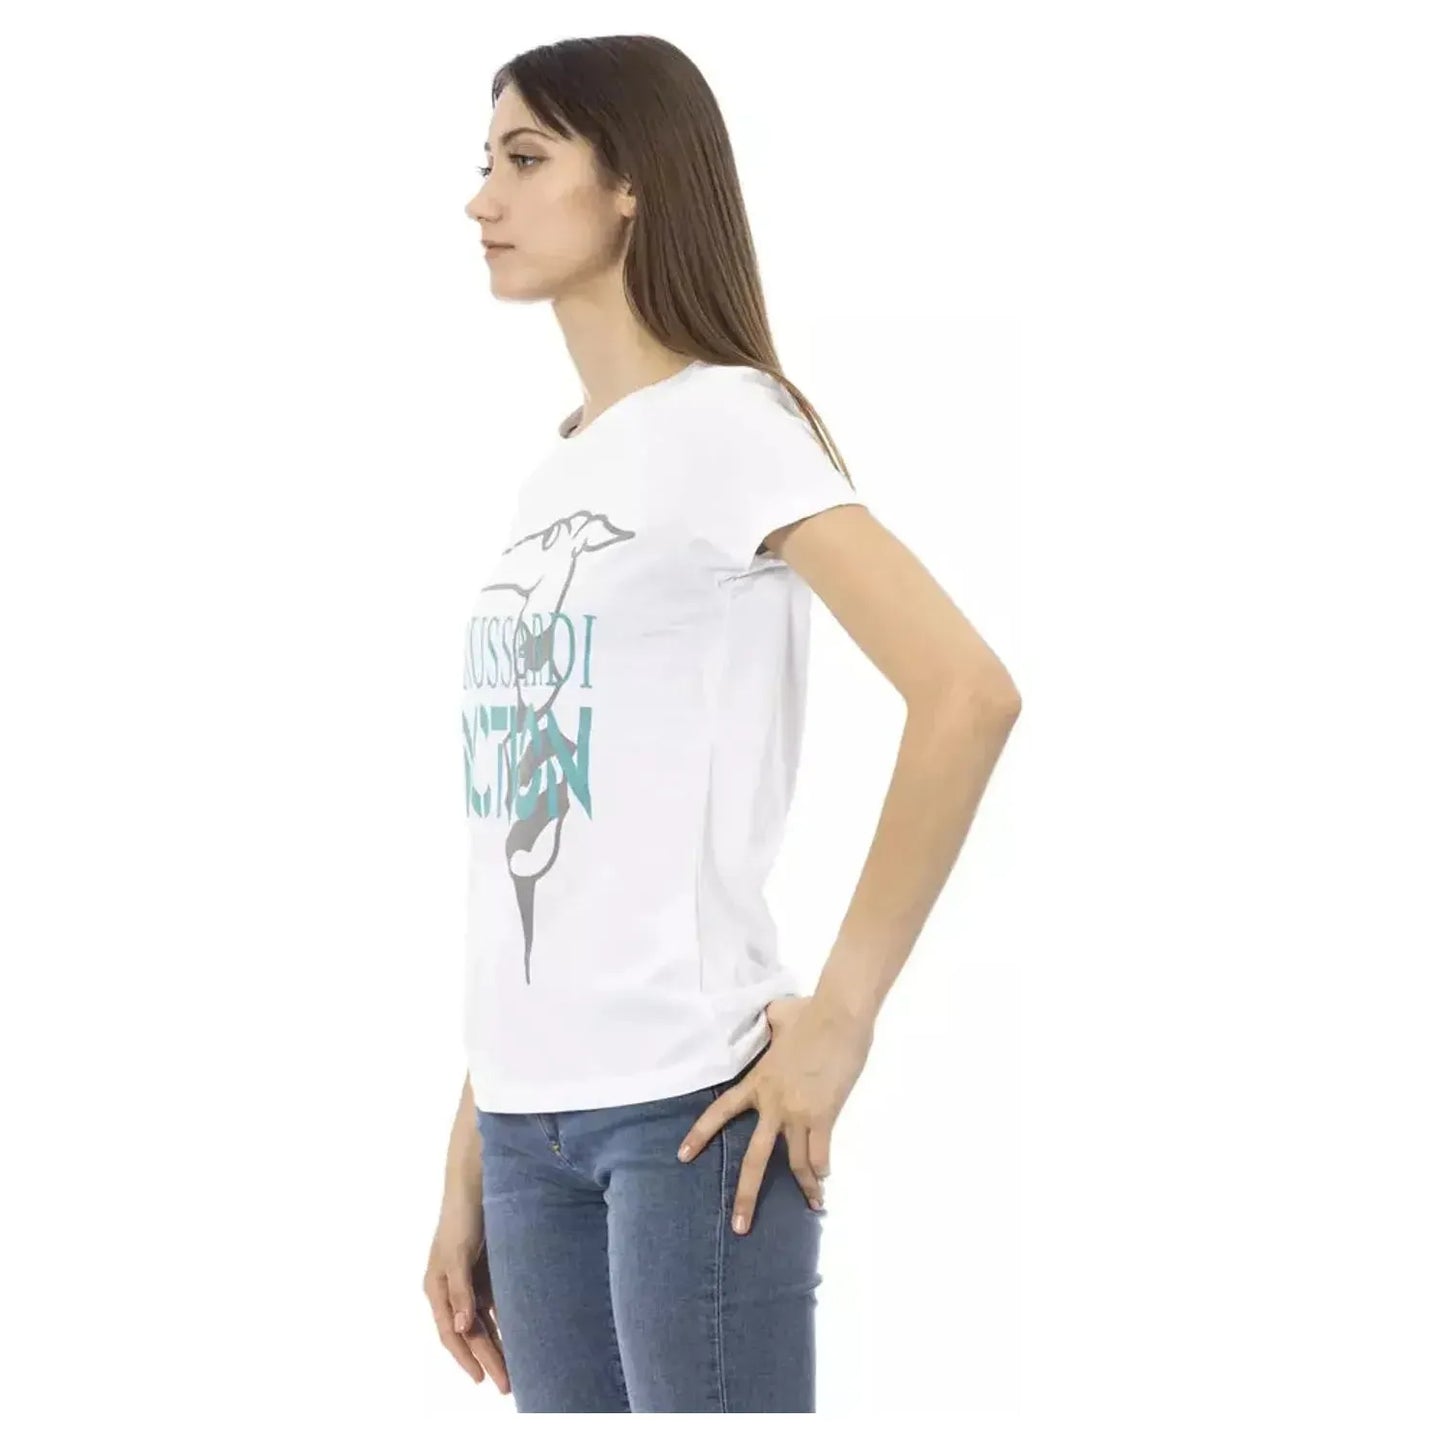 Trussardi Action Chic White Printed Tee: Summer Wardrobe Essential white-cotton-tops-t-shirt-110